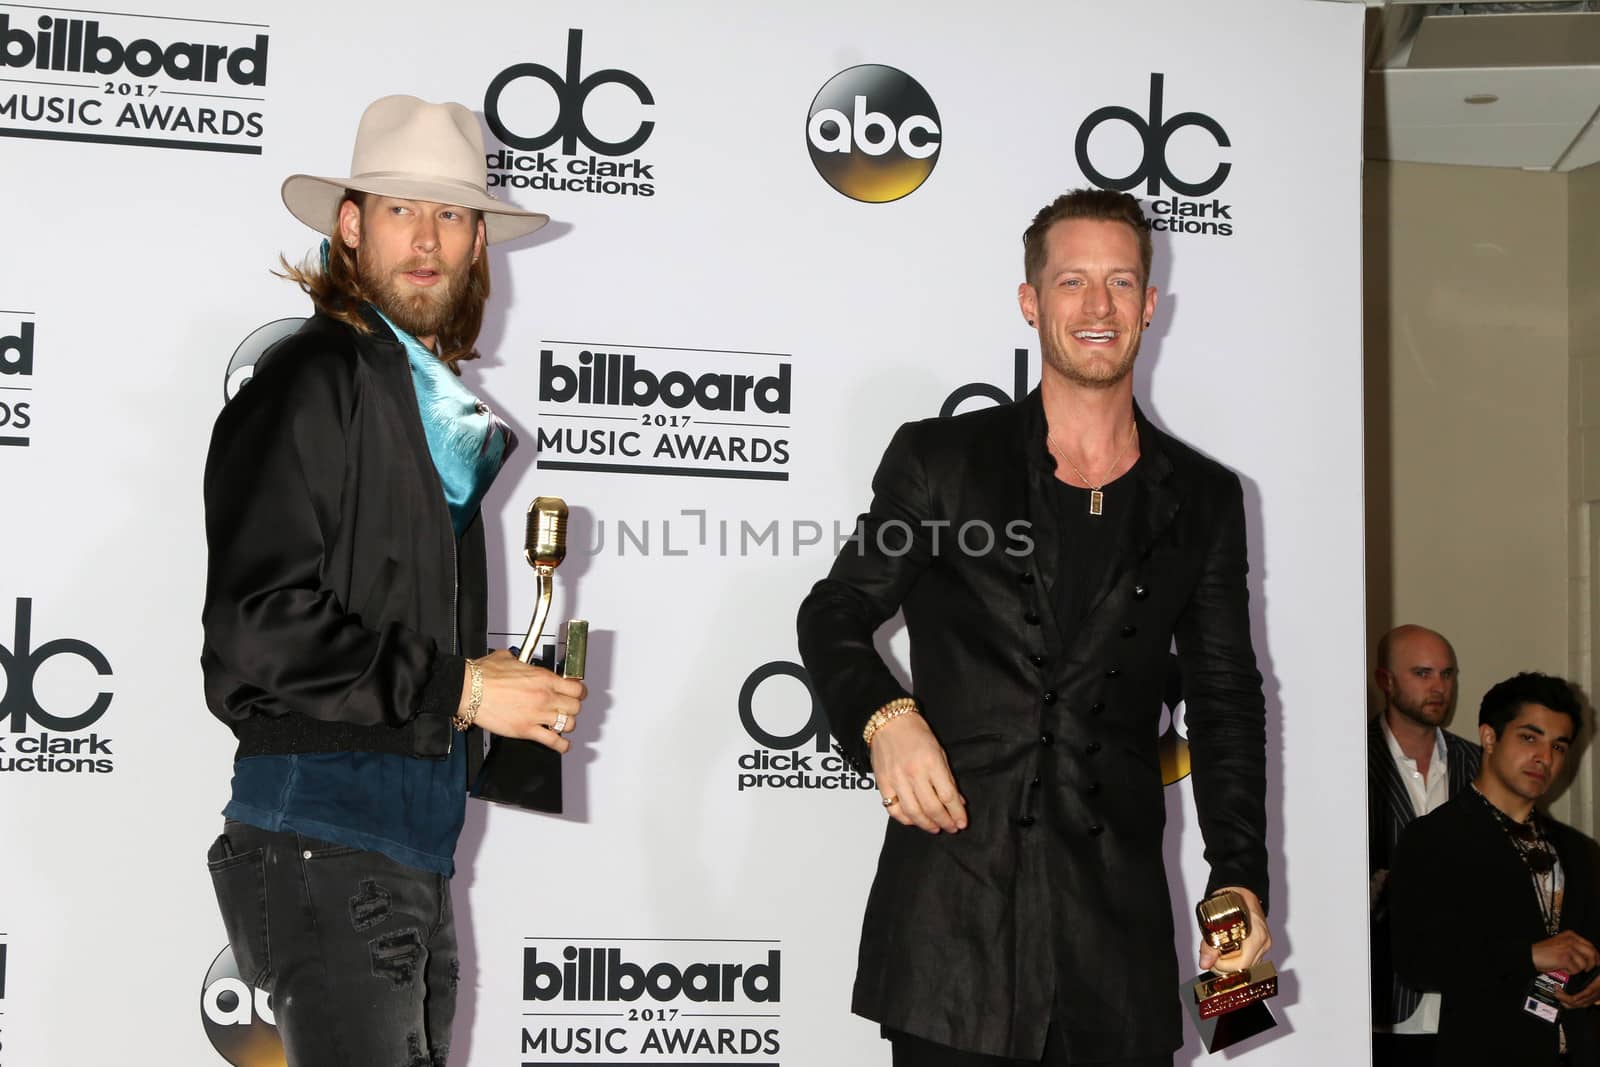 Florida Georgia Line, Brian Kelley, Tyler Hubbard
at the 2017 Billboard Awards Press Room, T-Mobile Arena, Las Vegas, NV 05-21-17/ImageCollect by ImageCollect